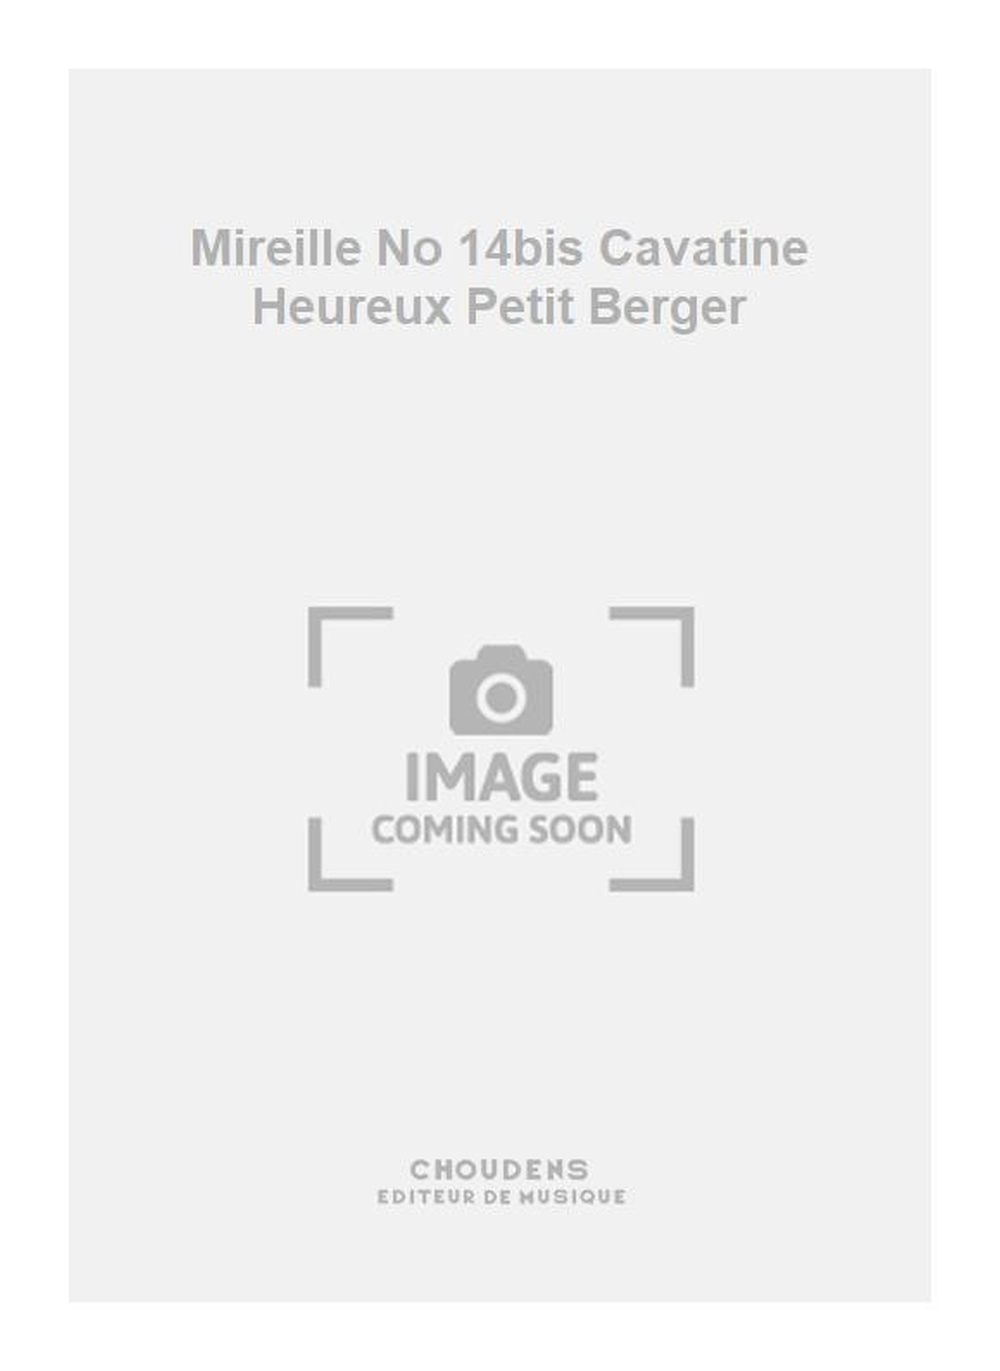 Charles Gounod: Mireille No 14bis Cavatine Heureux Petit Berger